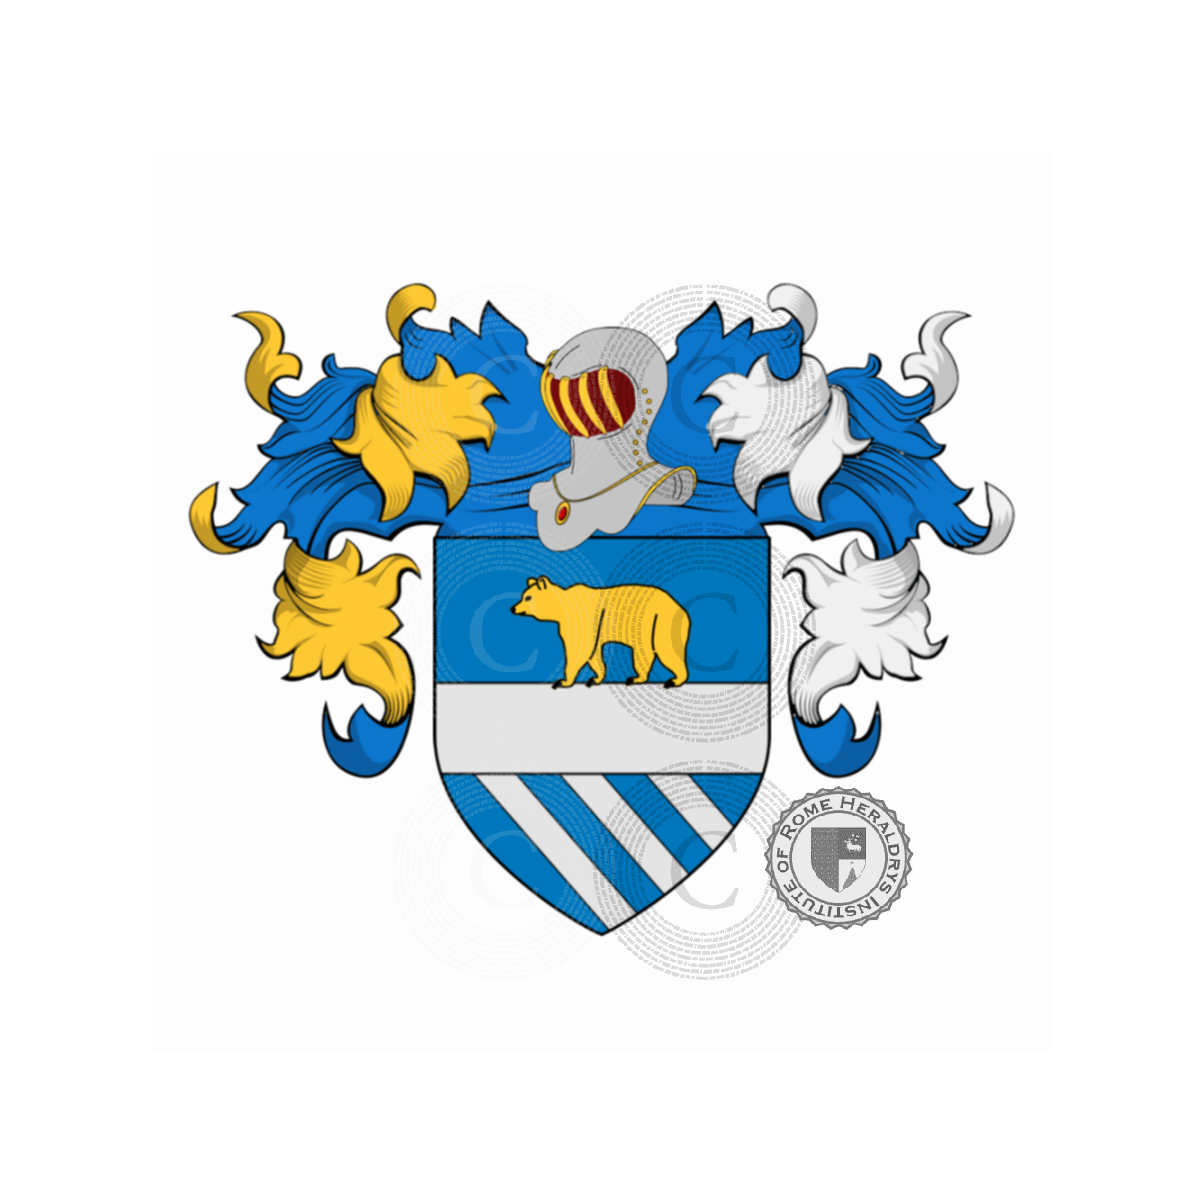 Wappen der FamilieUrso, d'Urso,Durso,Orso,Tursi (de),Ursi